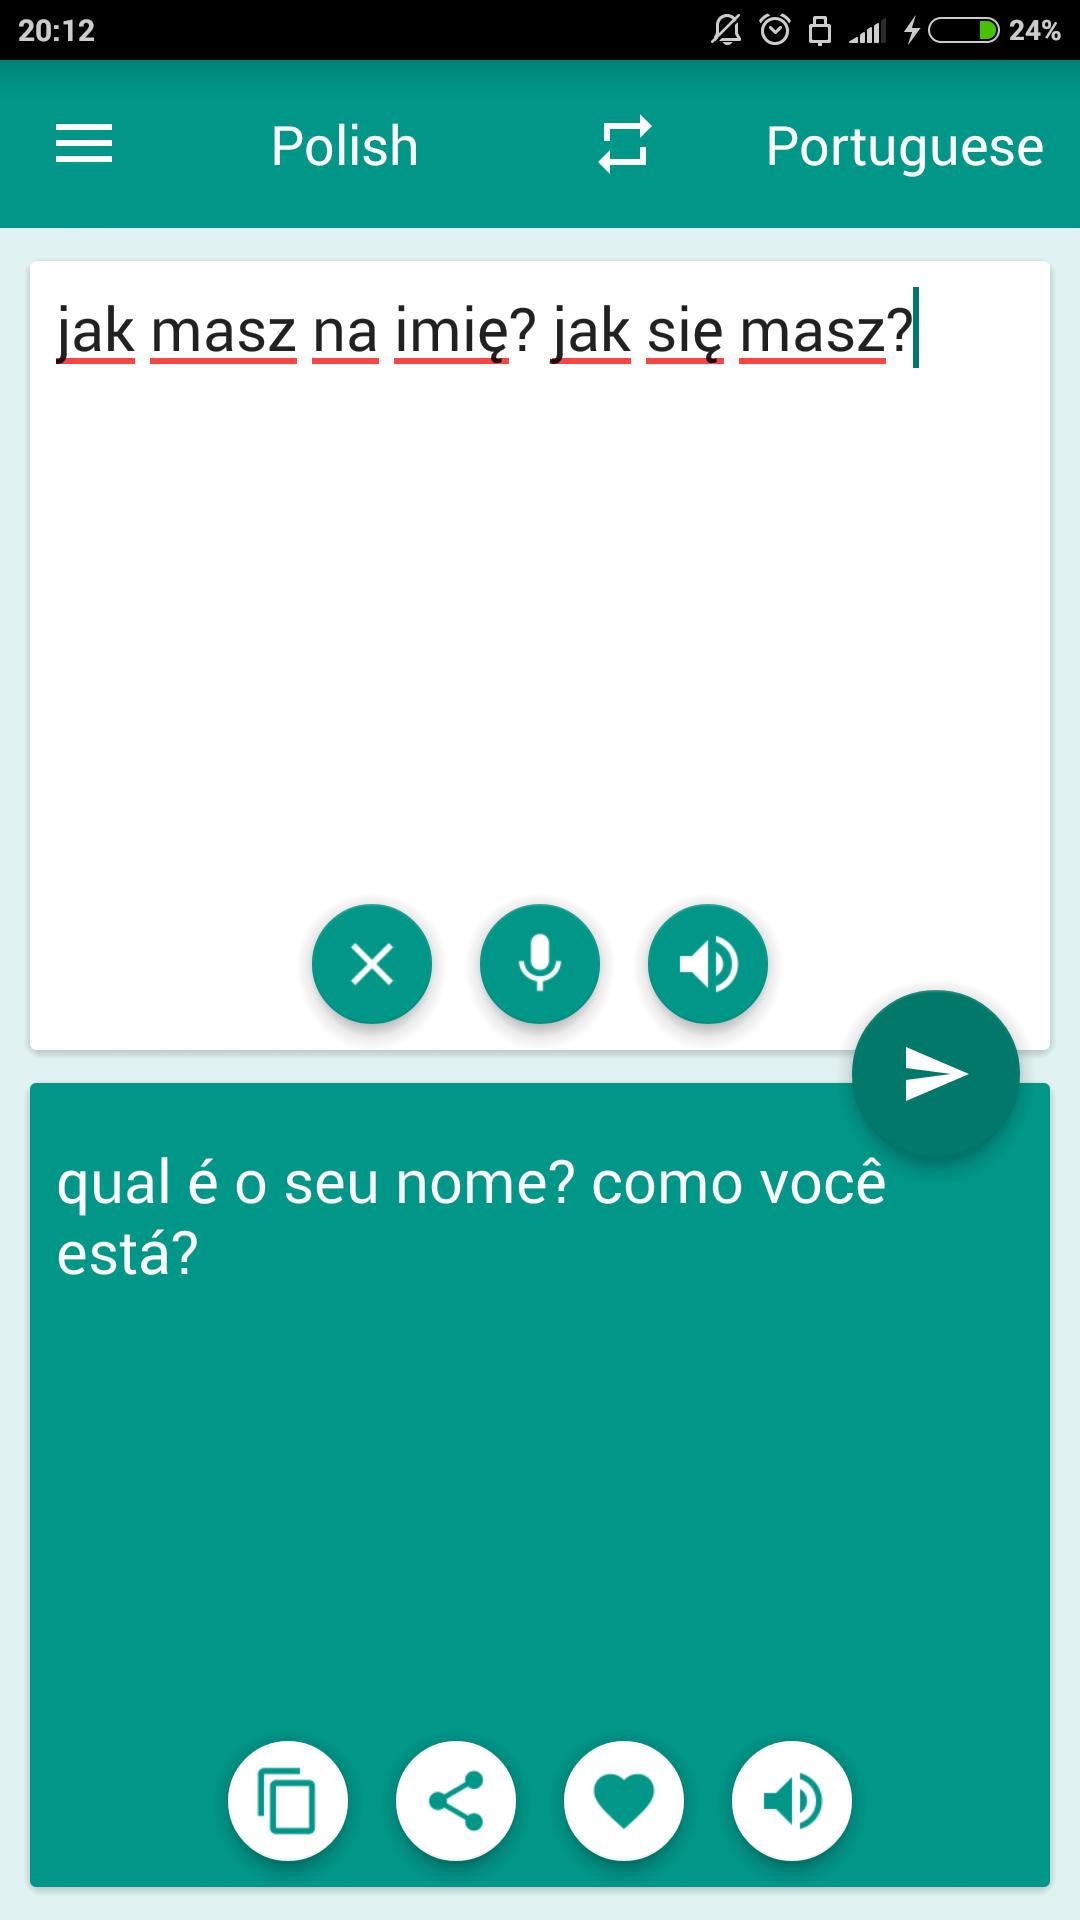 Polsko-portugalski Tłumacz for Android - APK Download